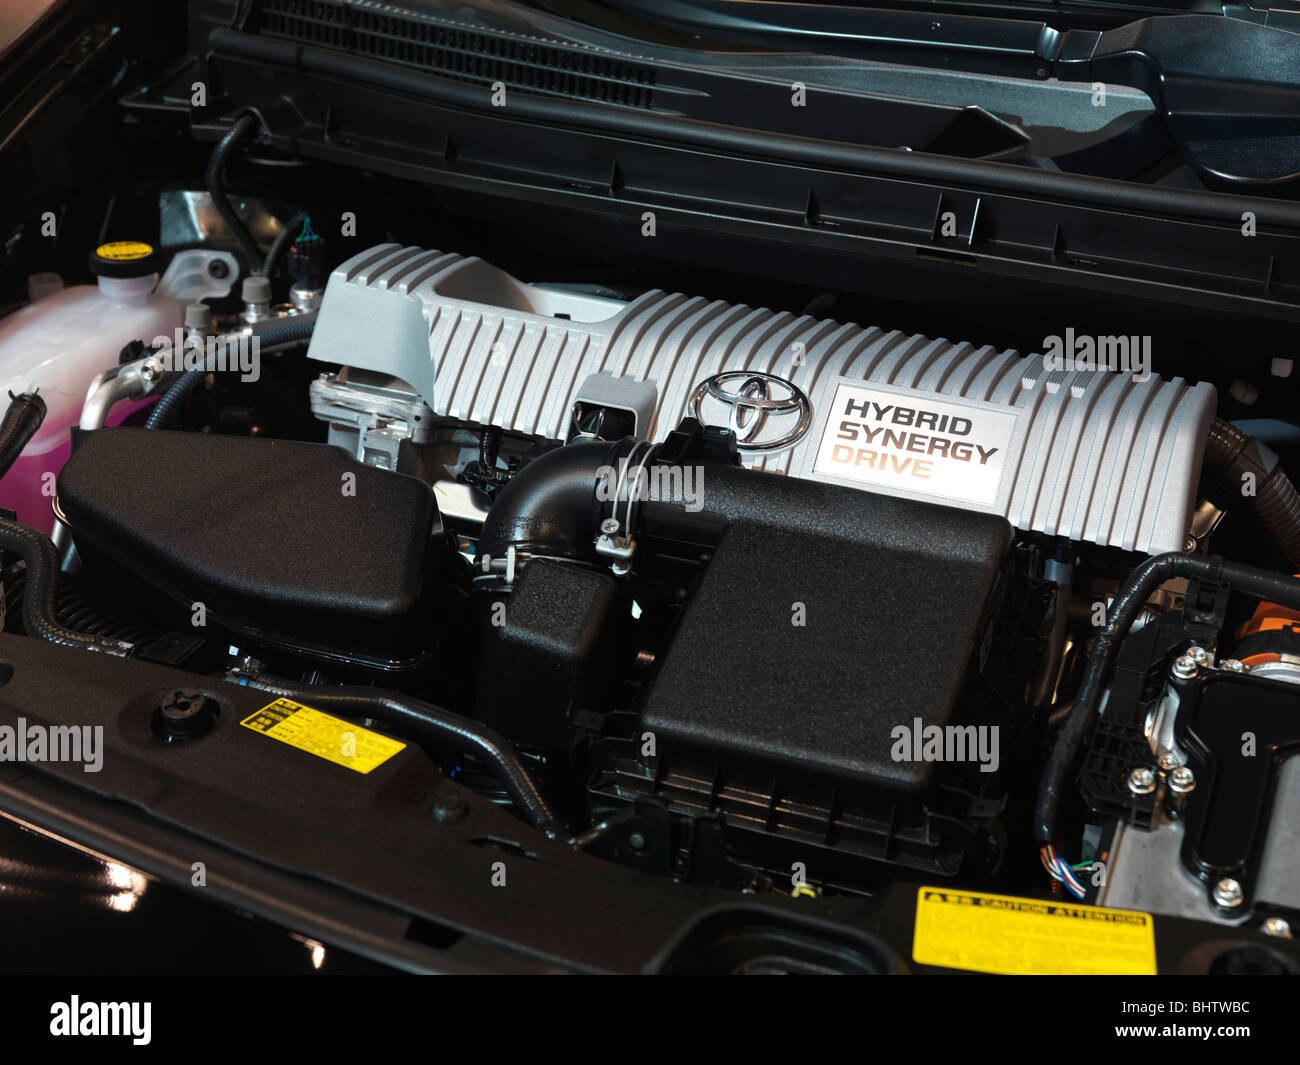 2010 Toyota Prius Hybrid Synergy Drive Engine Stock Photo